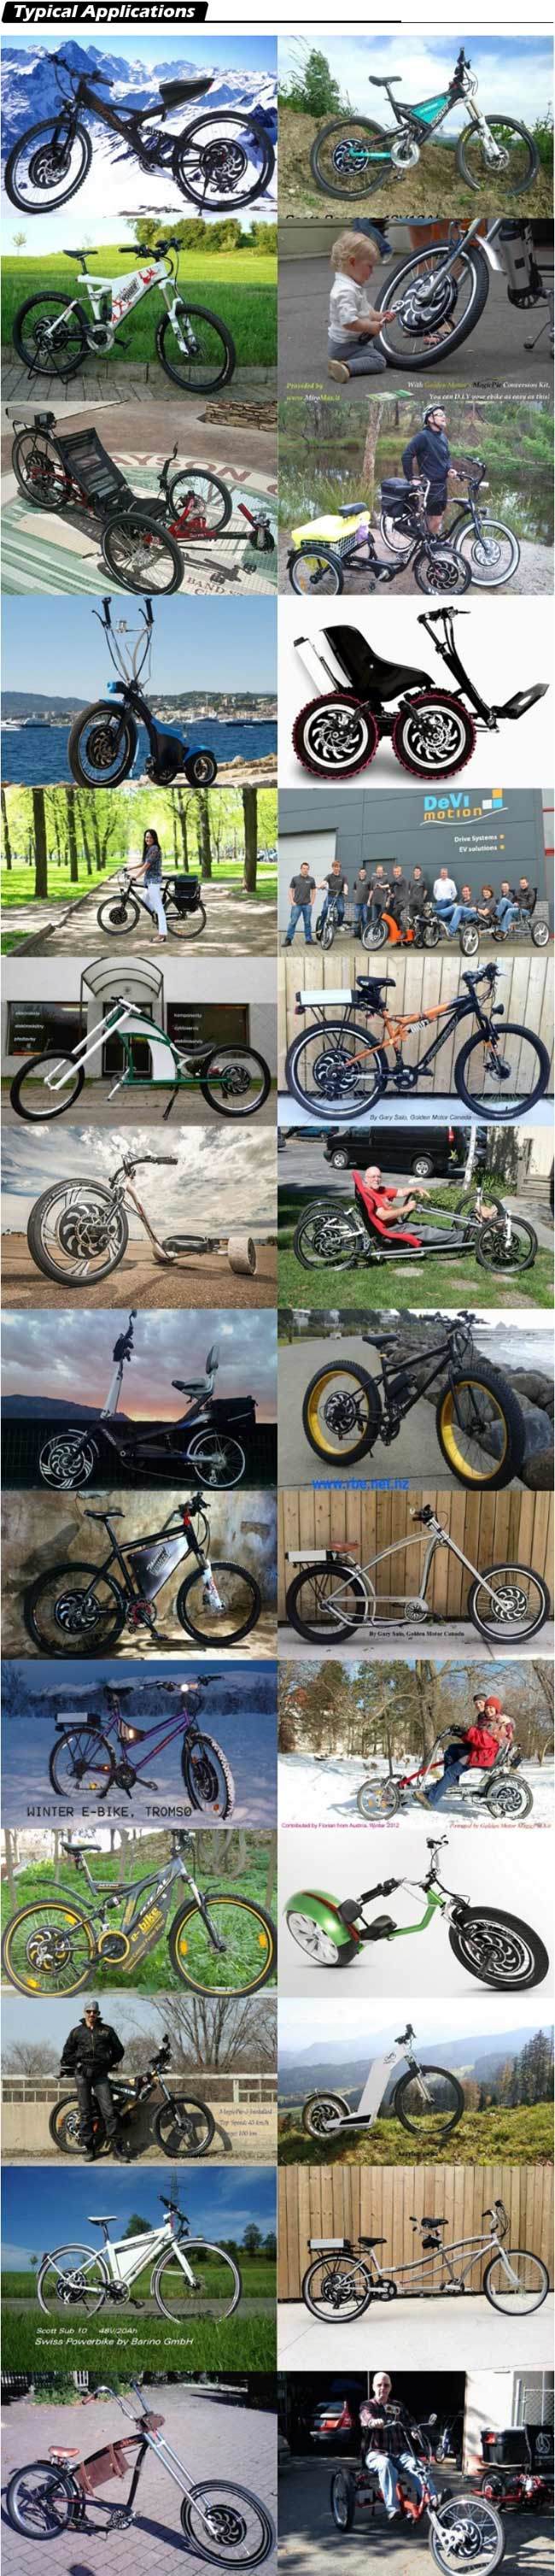 MP5 electric hub motor,electric bike motor ,electric bike kit ,electric bicycle motor,electric bicycle kit,electric tricycle motor with programmable controller